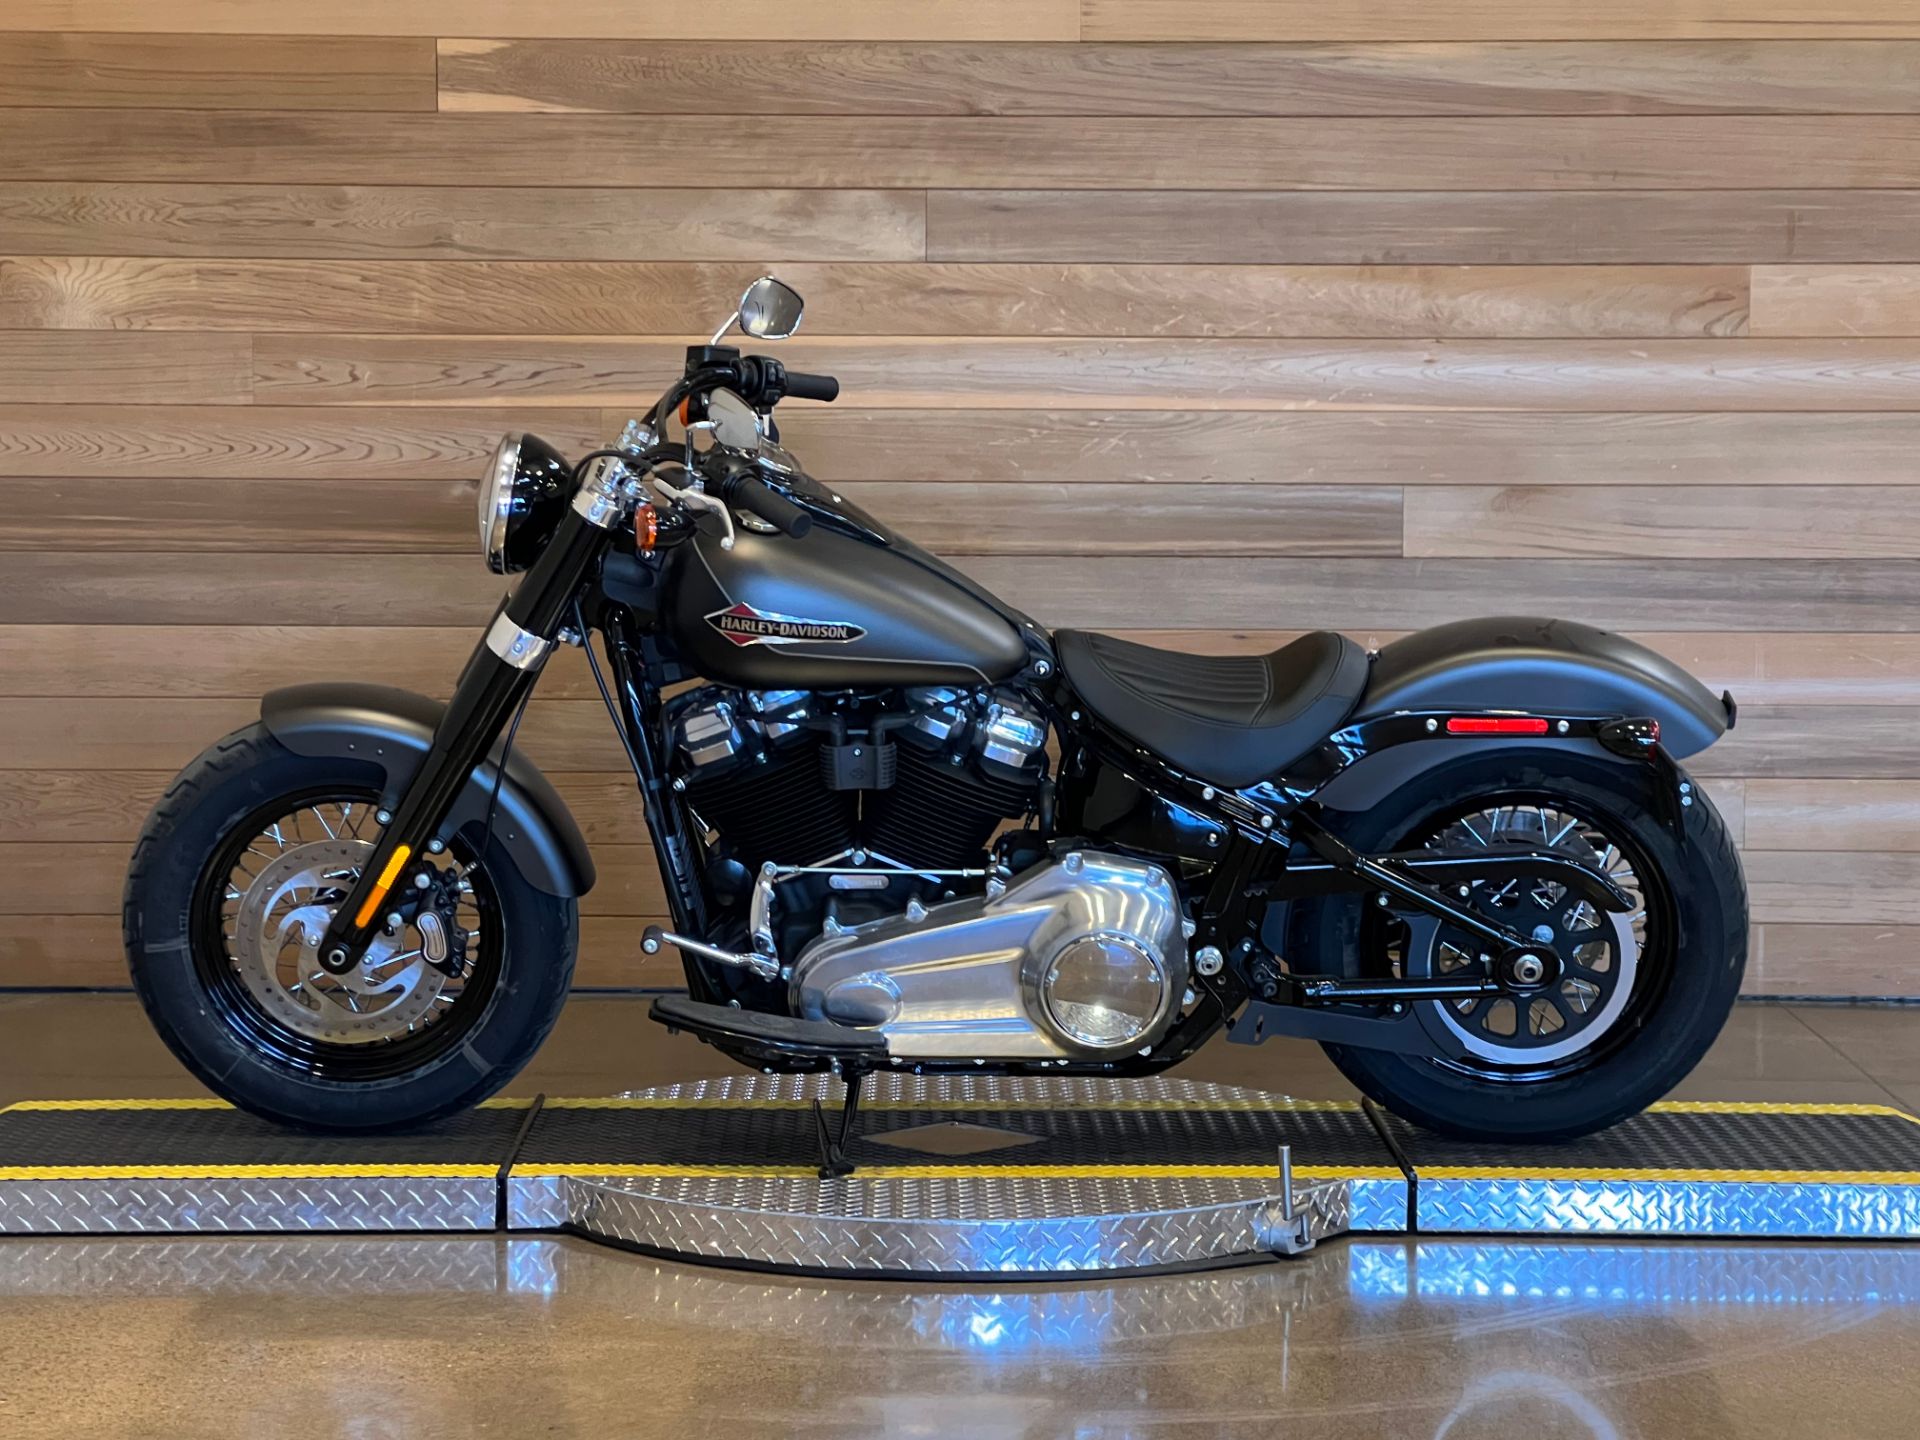 2021 Harley-Davidson Softail Slim® in Salem, Oregon - Photo 5